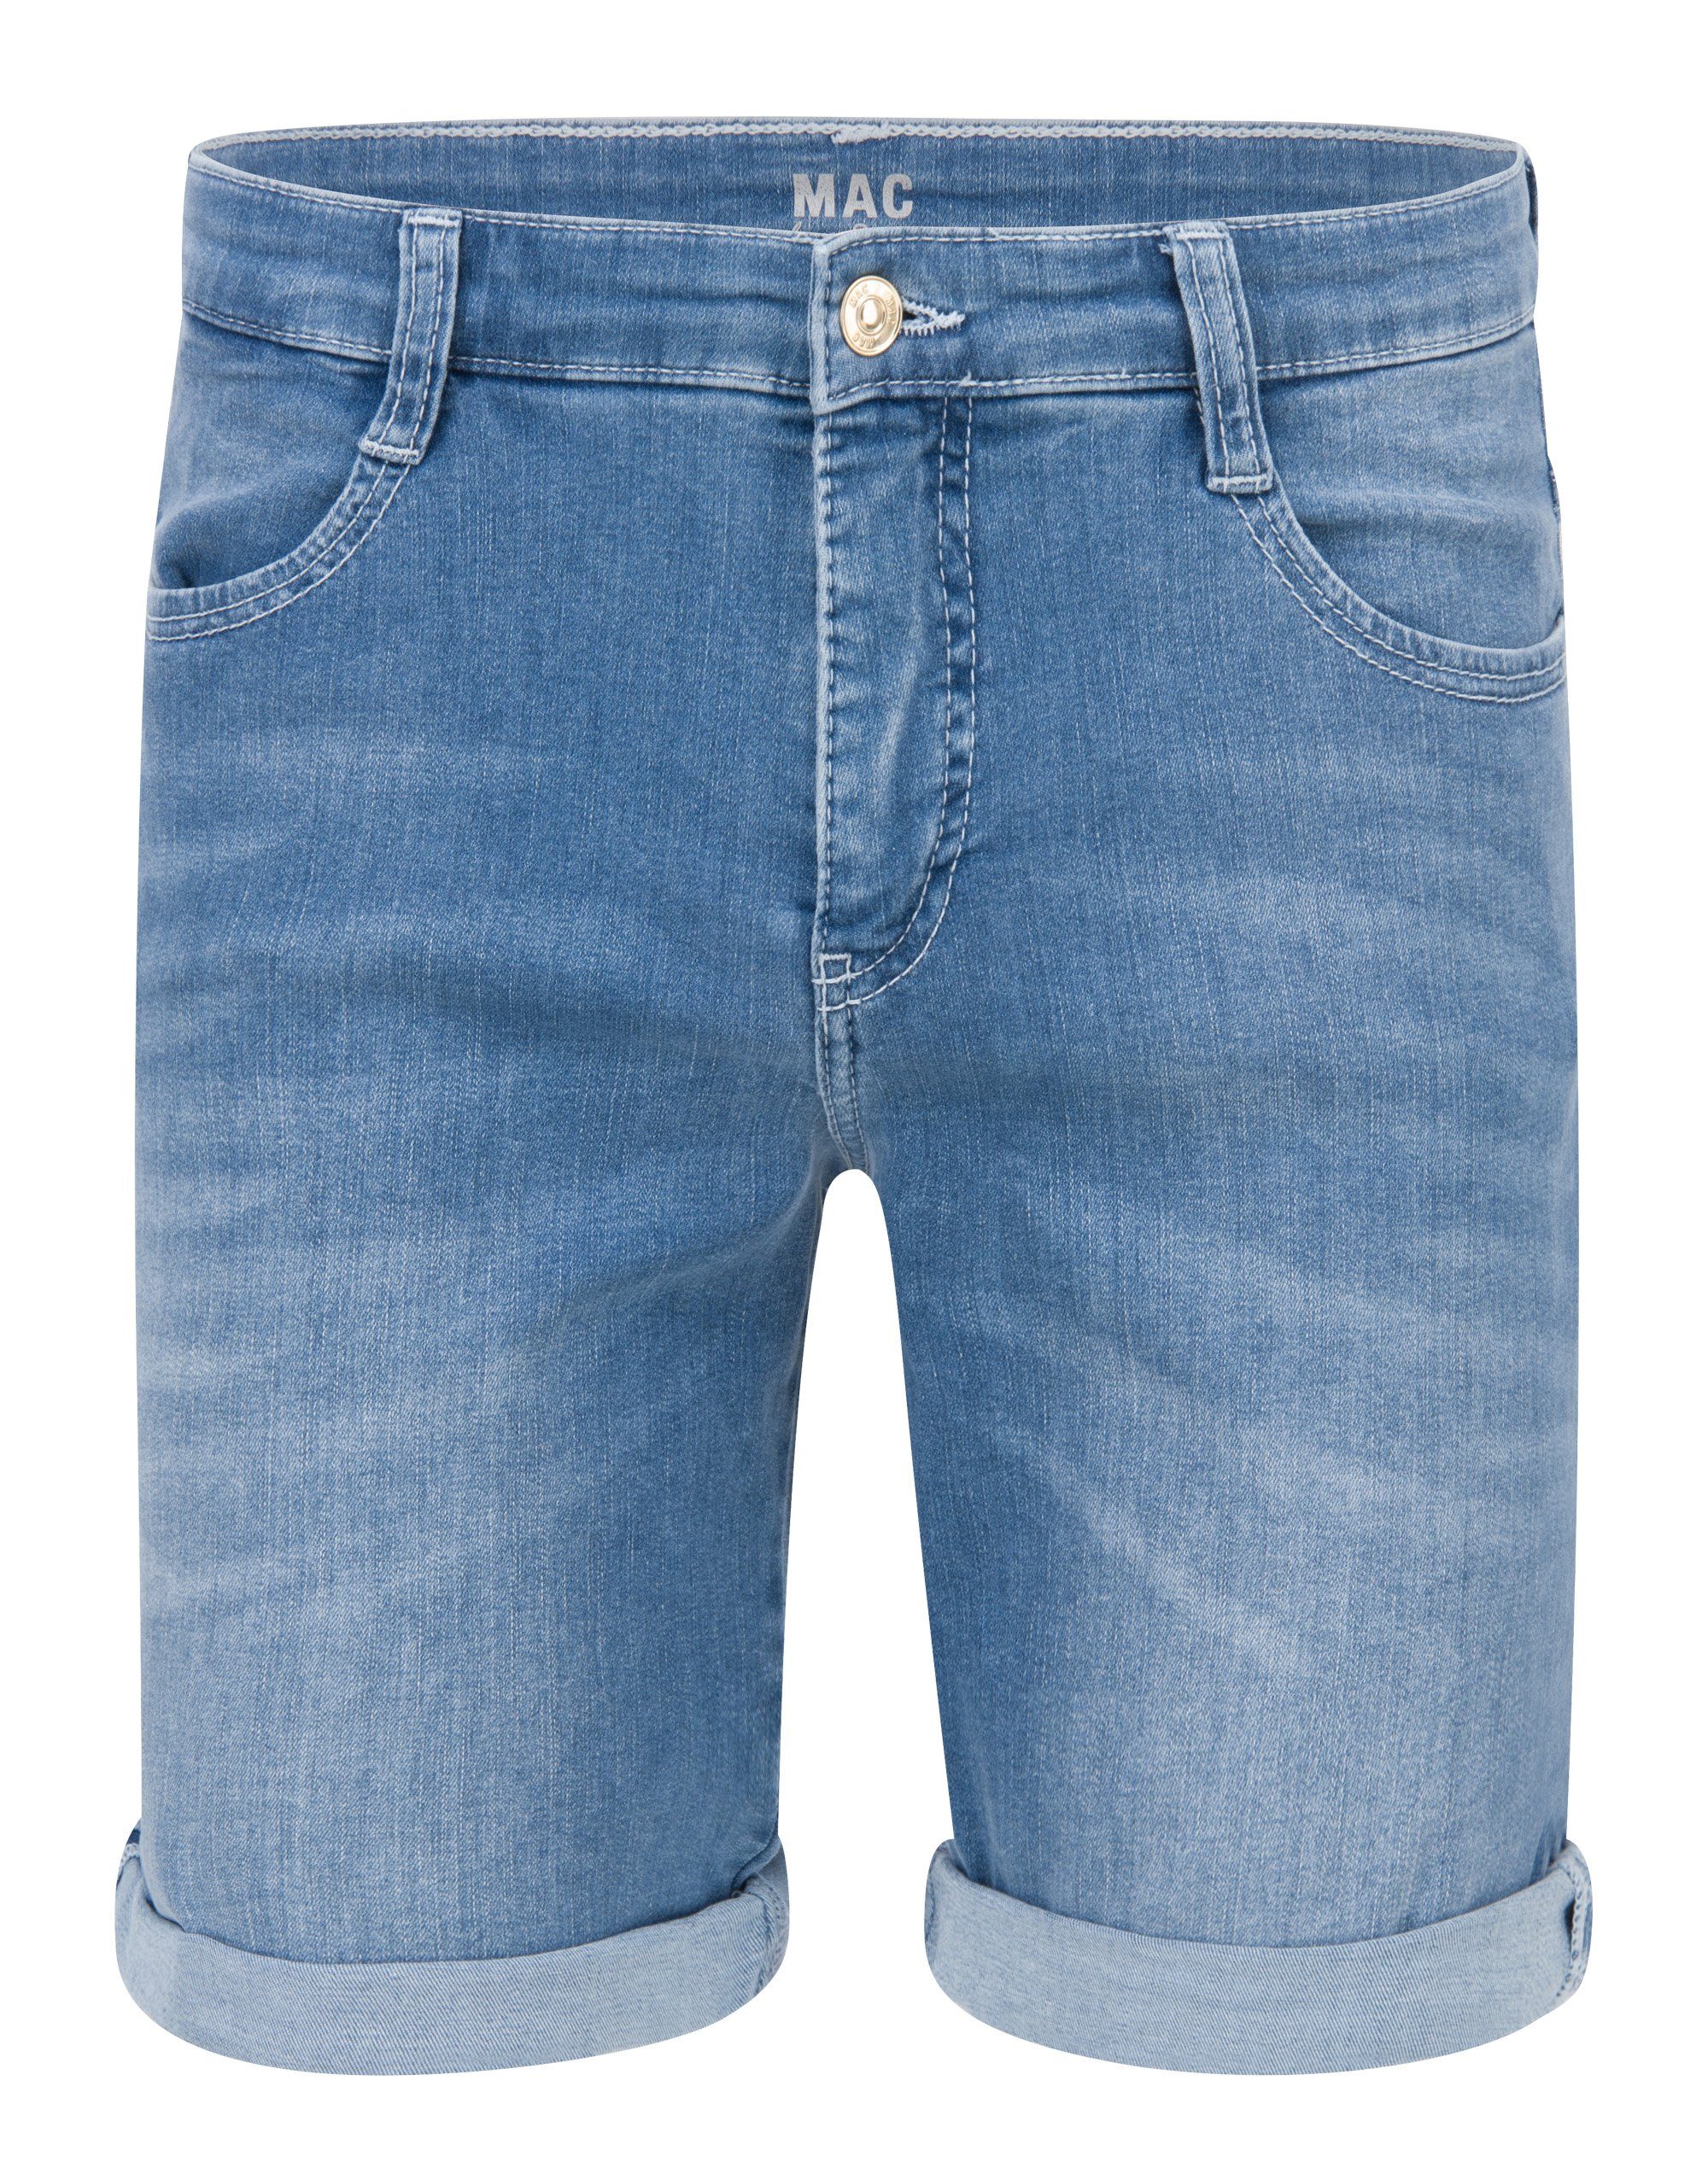 MAC Stretch-Jeans MAC SHORTY SUMMER blue wash 2387-90-0396 D531